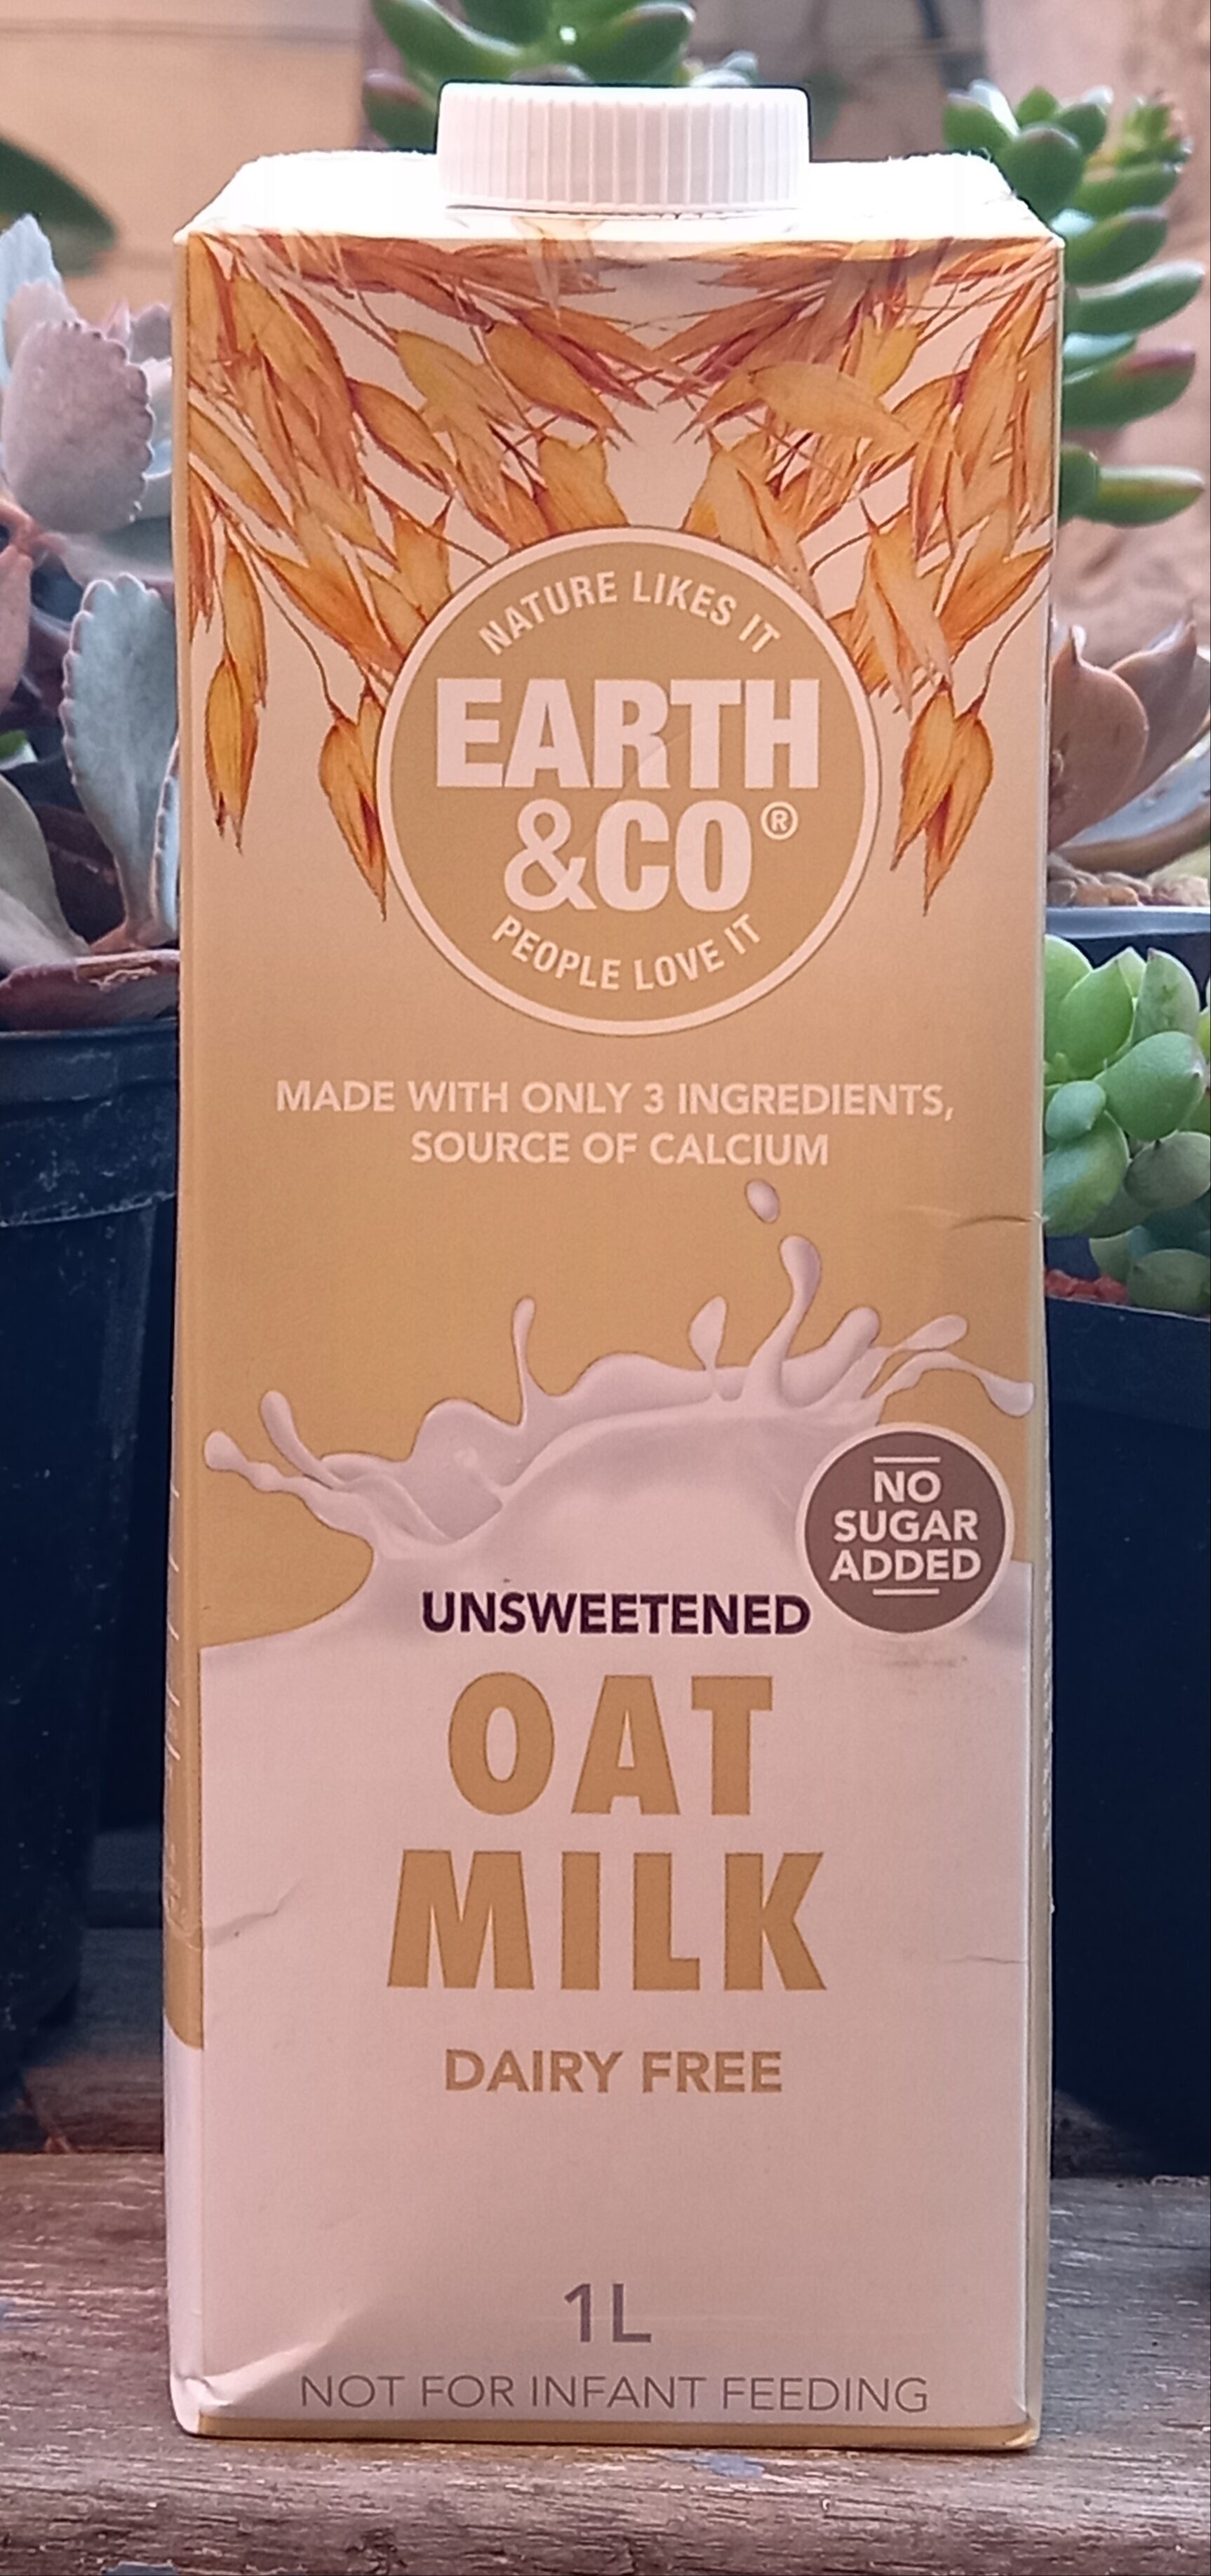 Unsweetened Oat Milk - Product